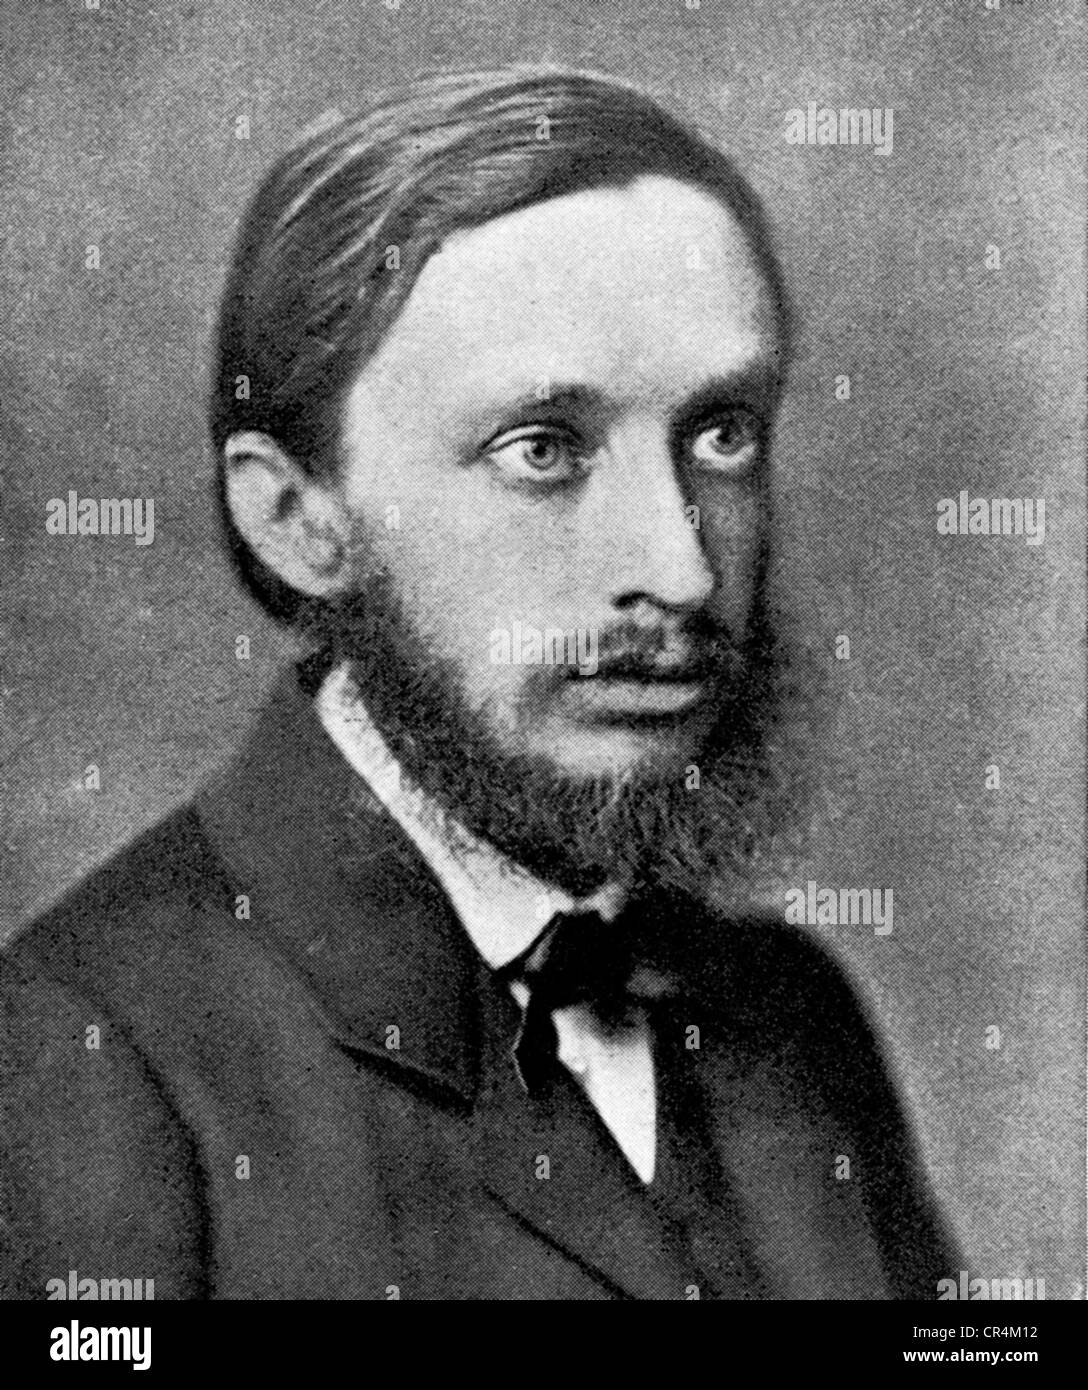 Goetz, Hermann, 7.12.1840 - 3.12.1876, German composer, portrait